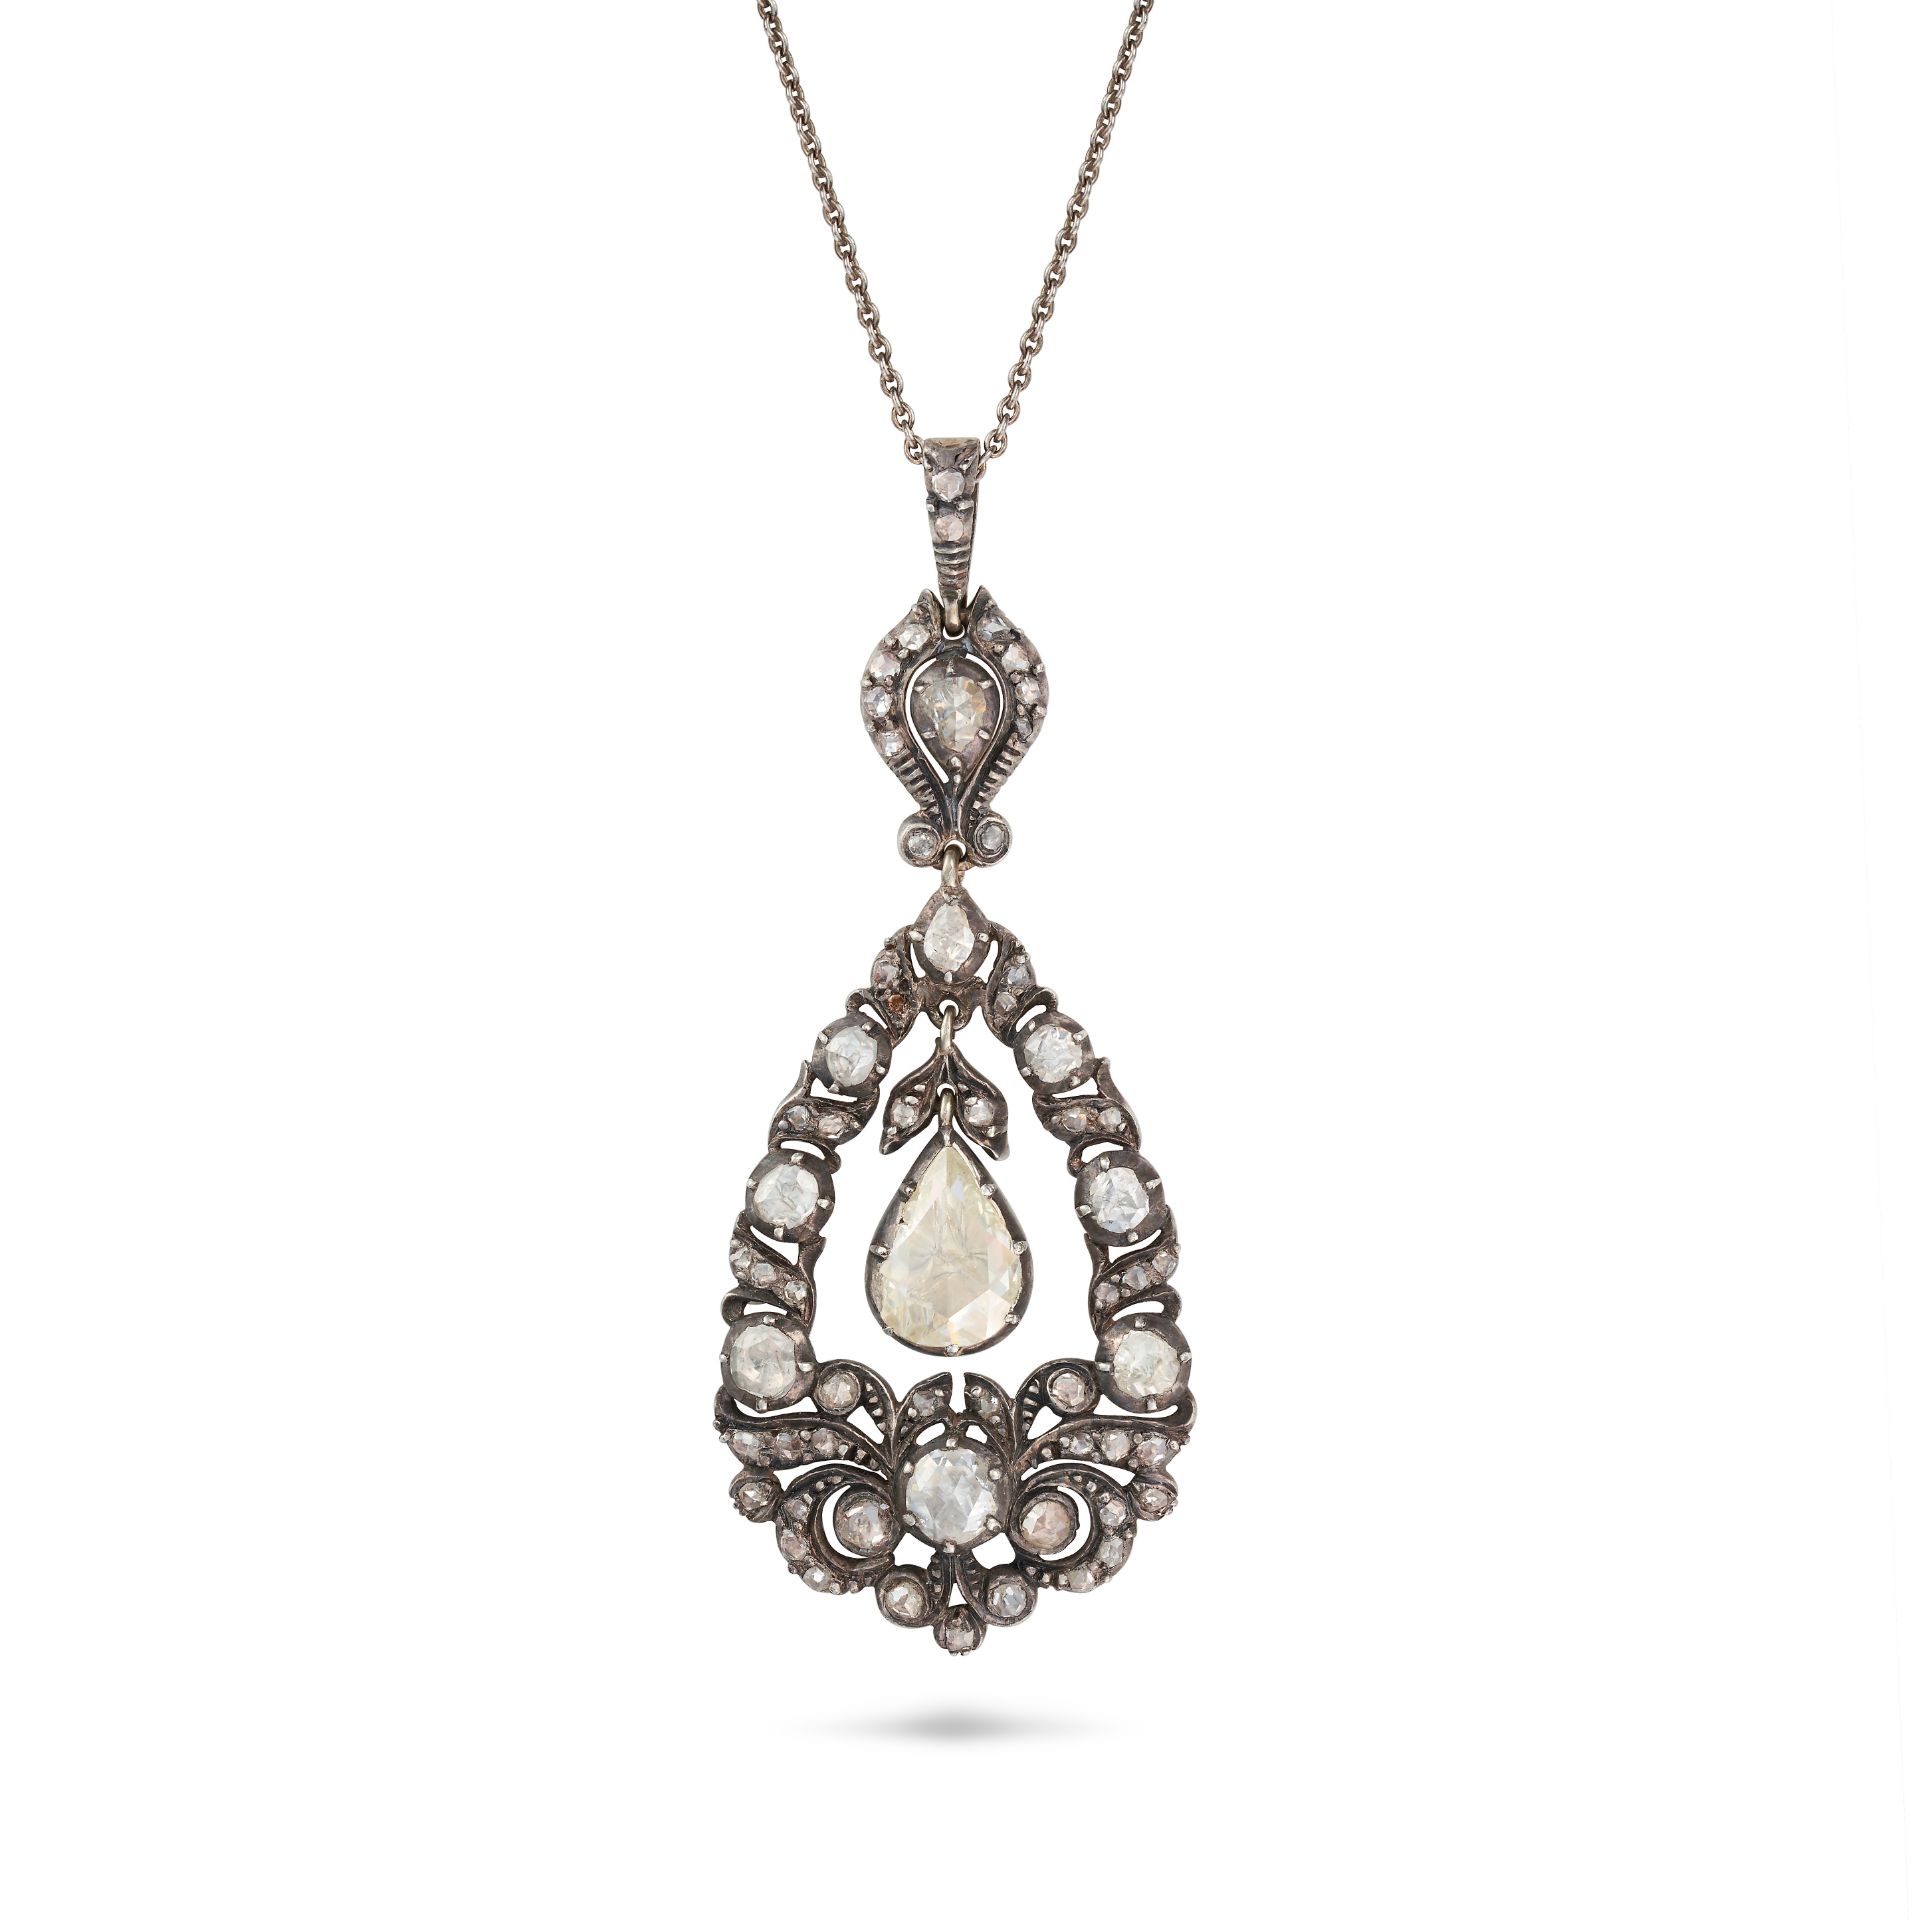 AN ANTIQUE DIAMOND PENDANT NECKLACE the pear shaped pendant set throughout with rose cut diamonds...